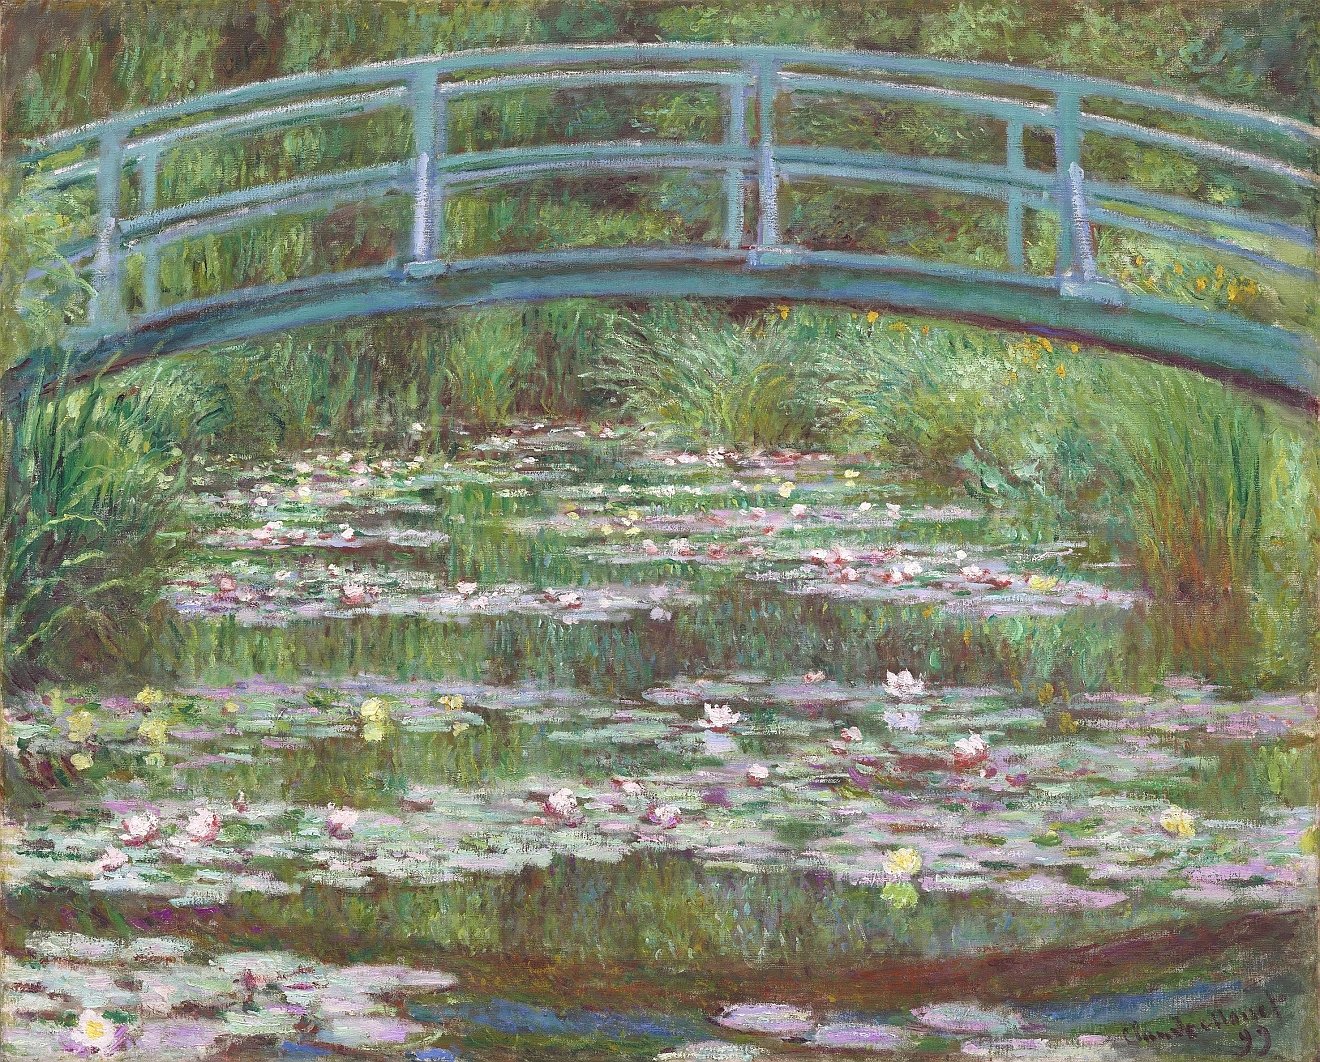 Claude+Monet-1840-1926 (405).jpg